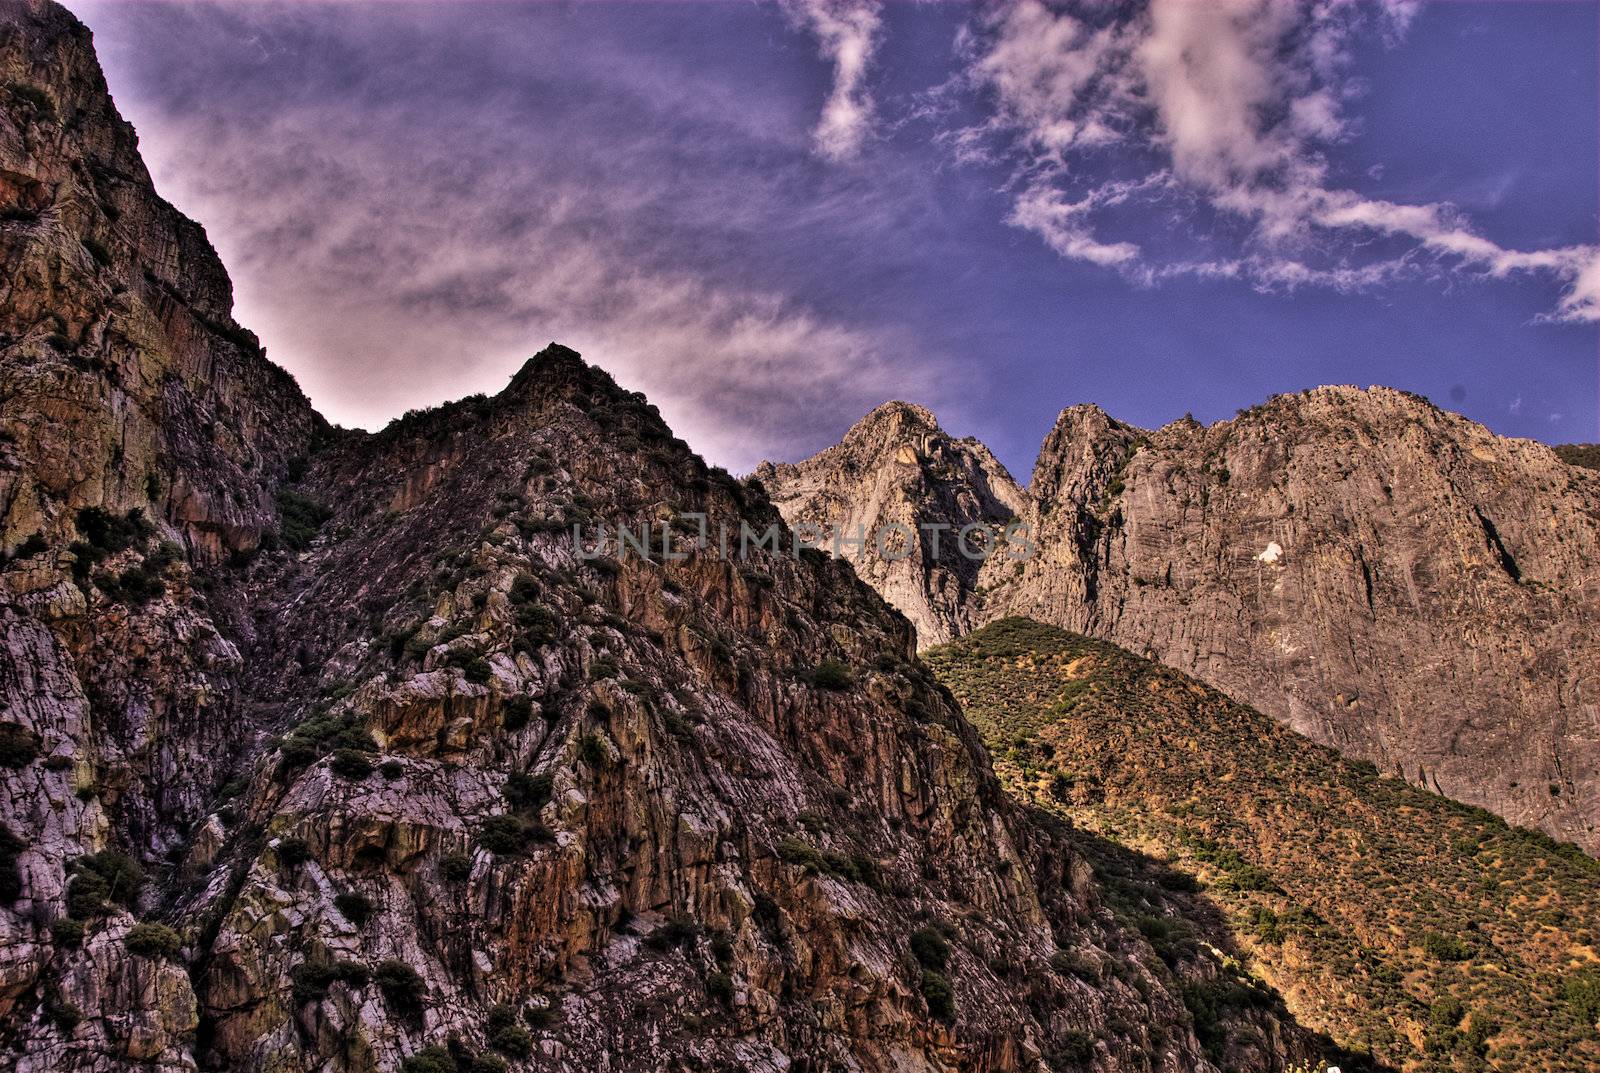 Kings Canyon 0346 - The granite mountain peaks of Kings Canyon.